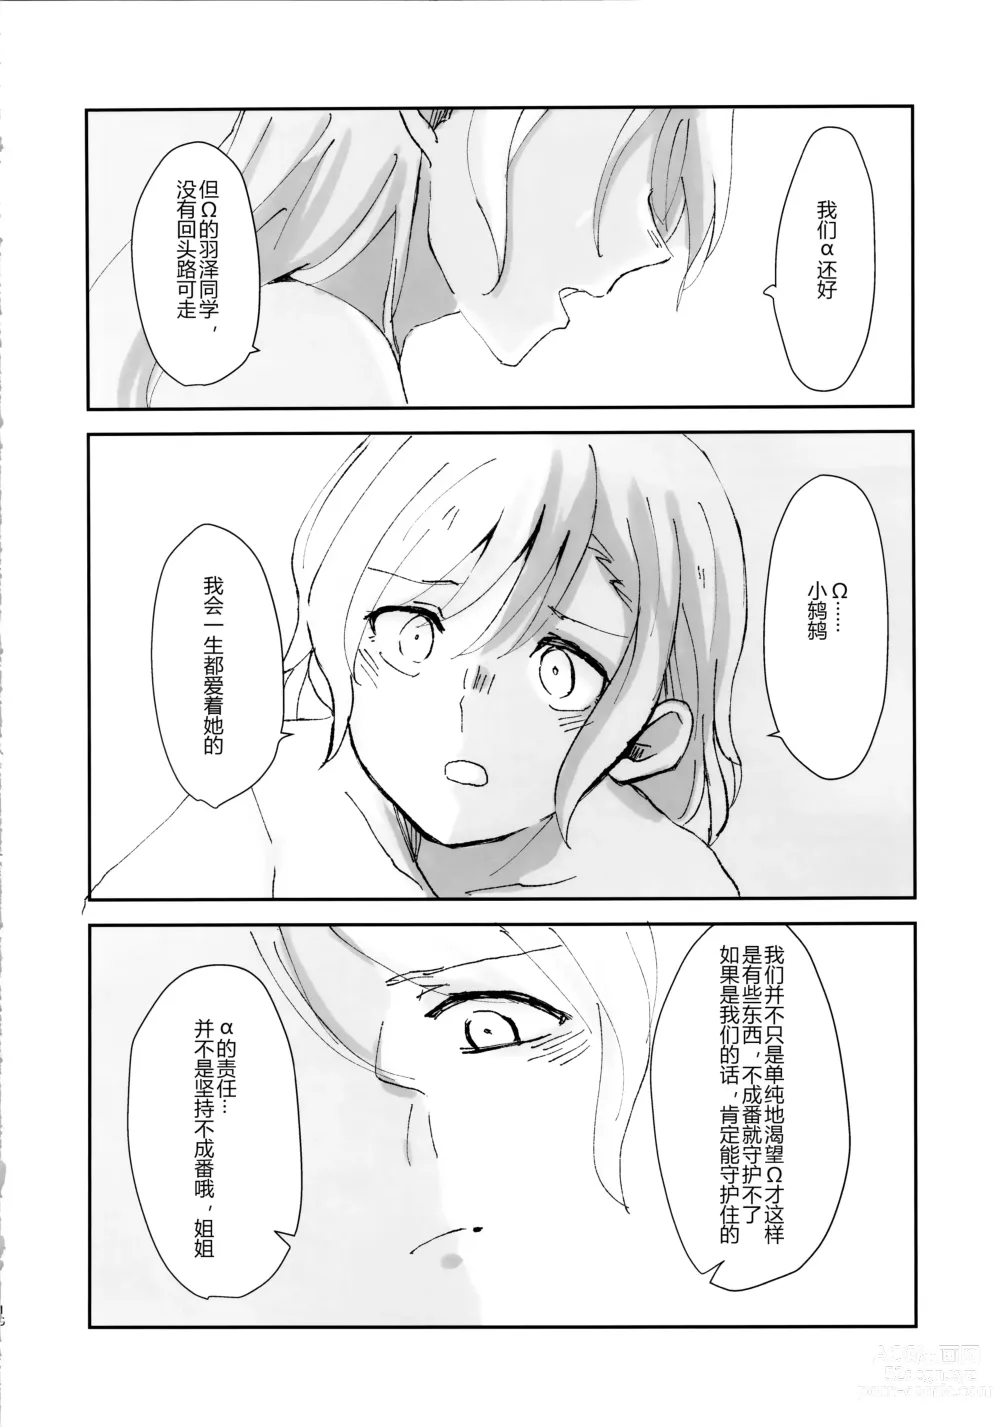 Page 16 of doujinshi 只要爱着彼此就好